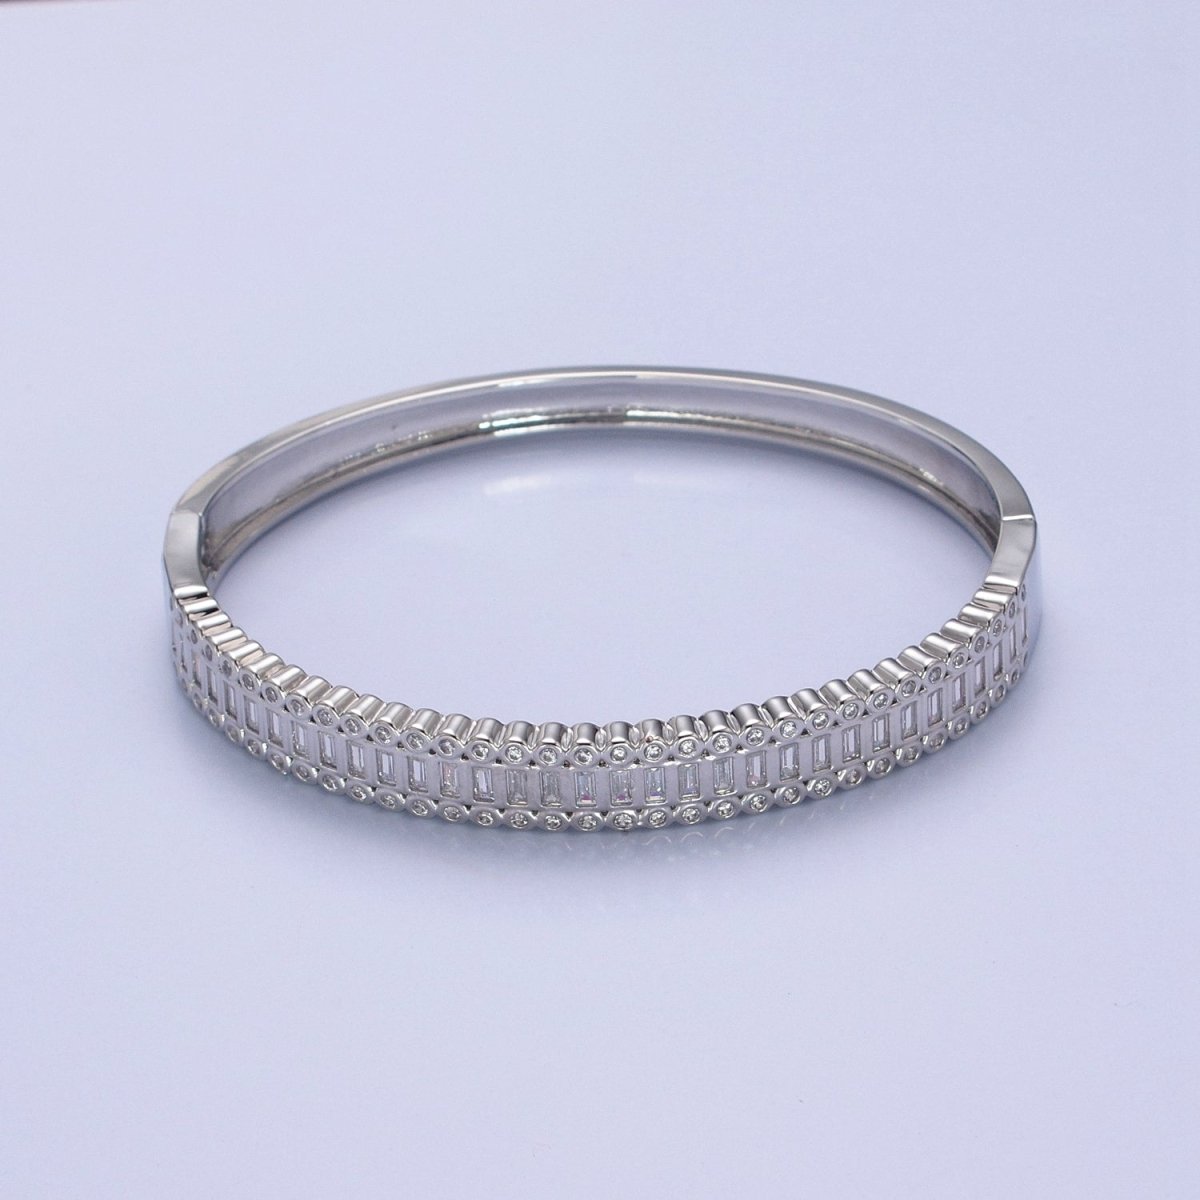 24K Gold Filled Slim Round CZ Stone Buckle Bangle Bracelet For Wholesale Bangles & Jewelry | WA-953 WA-954 Clearance Pricing - DLUXCA